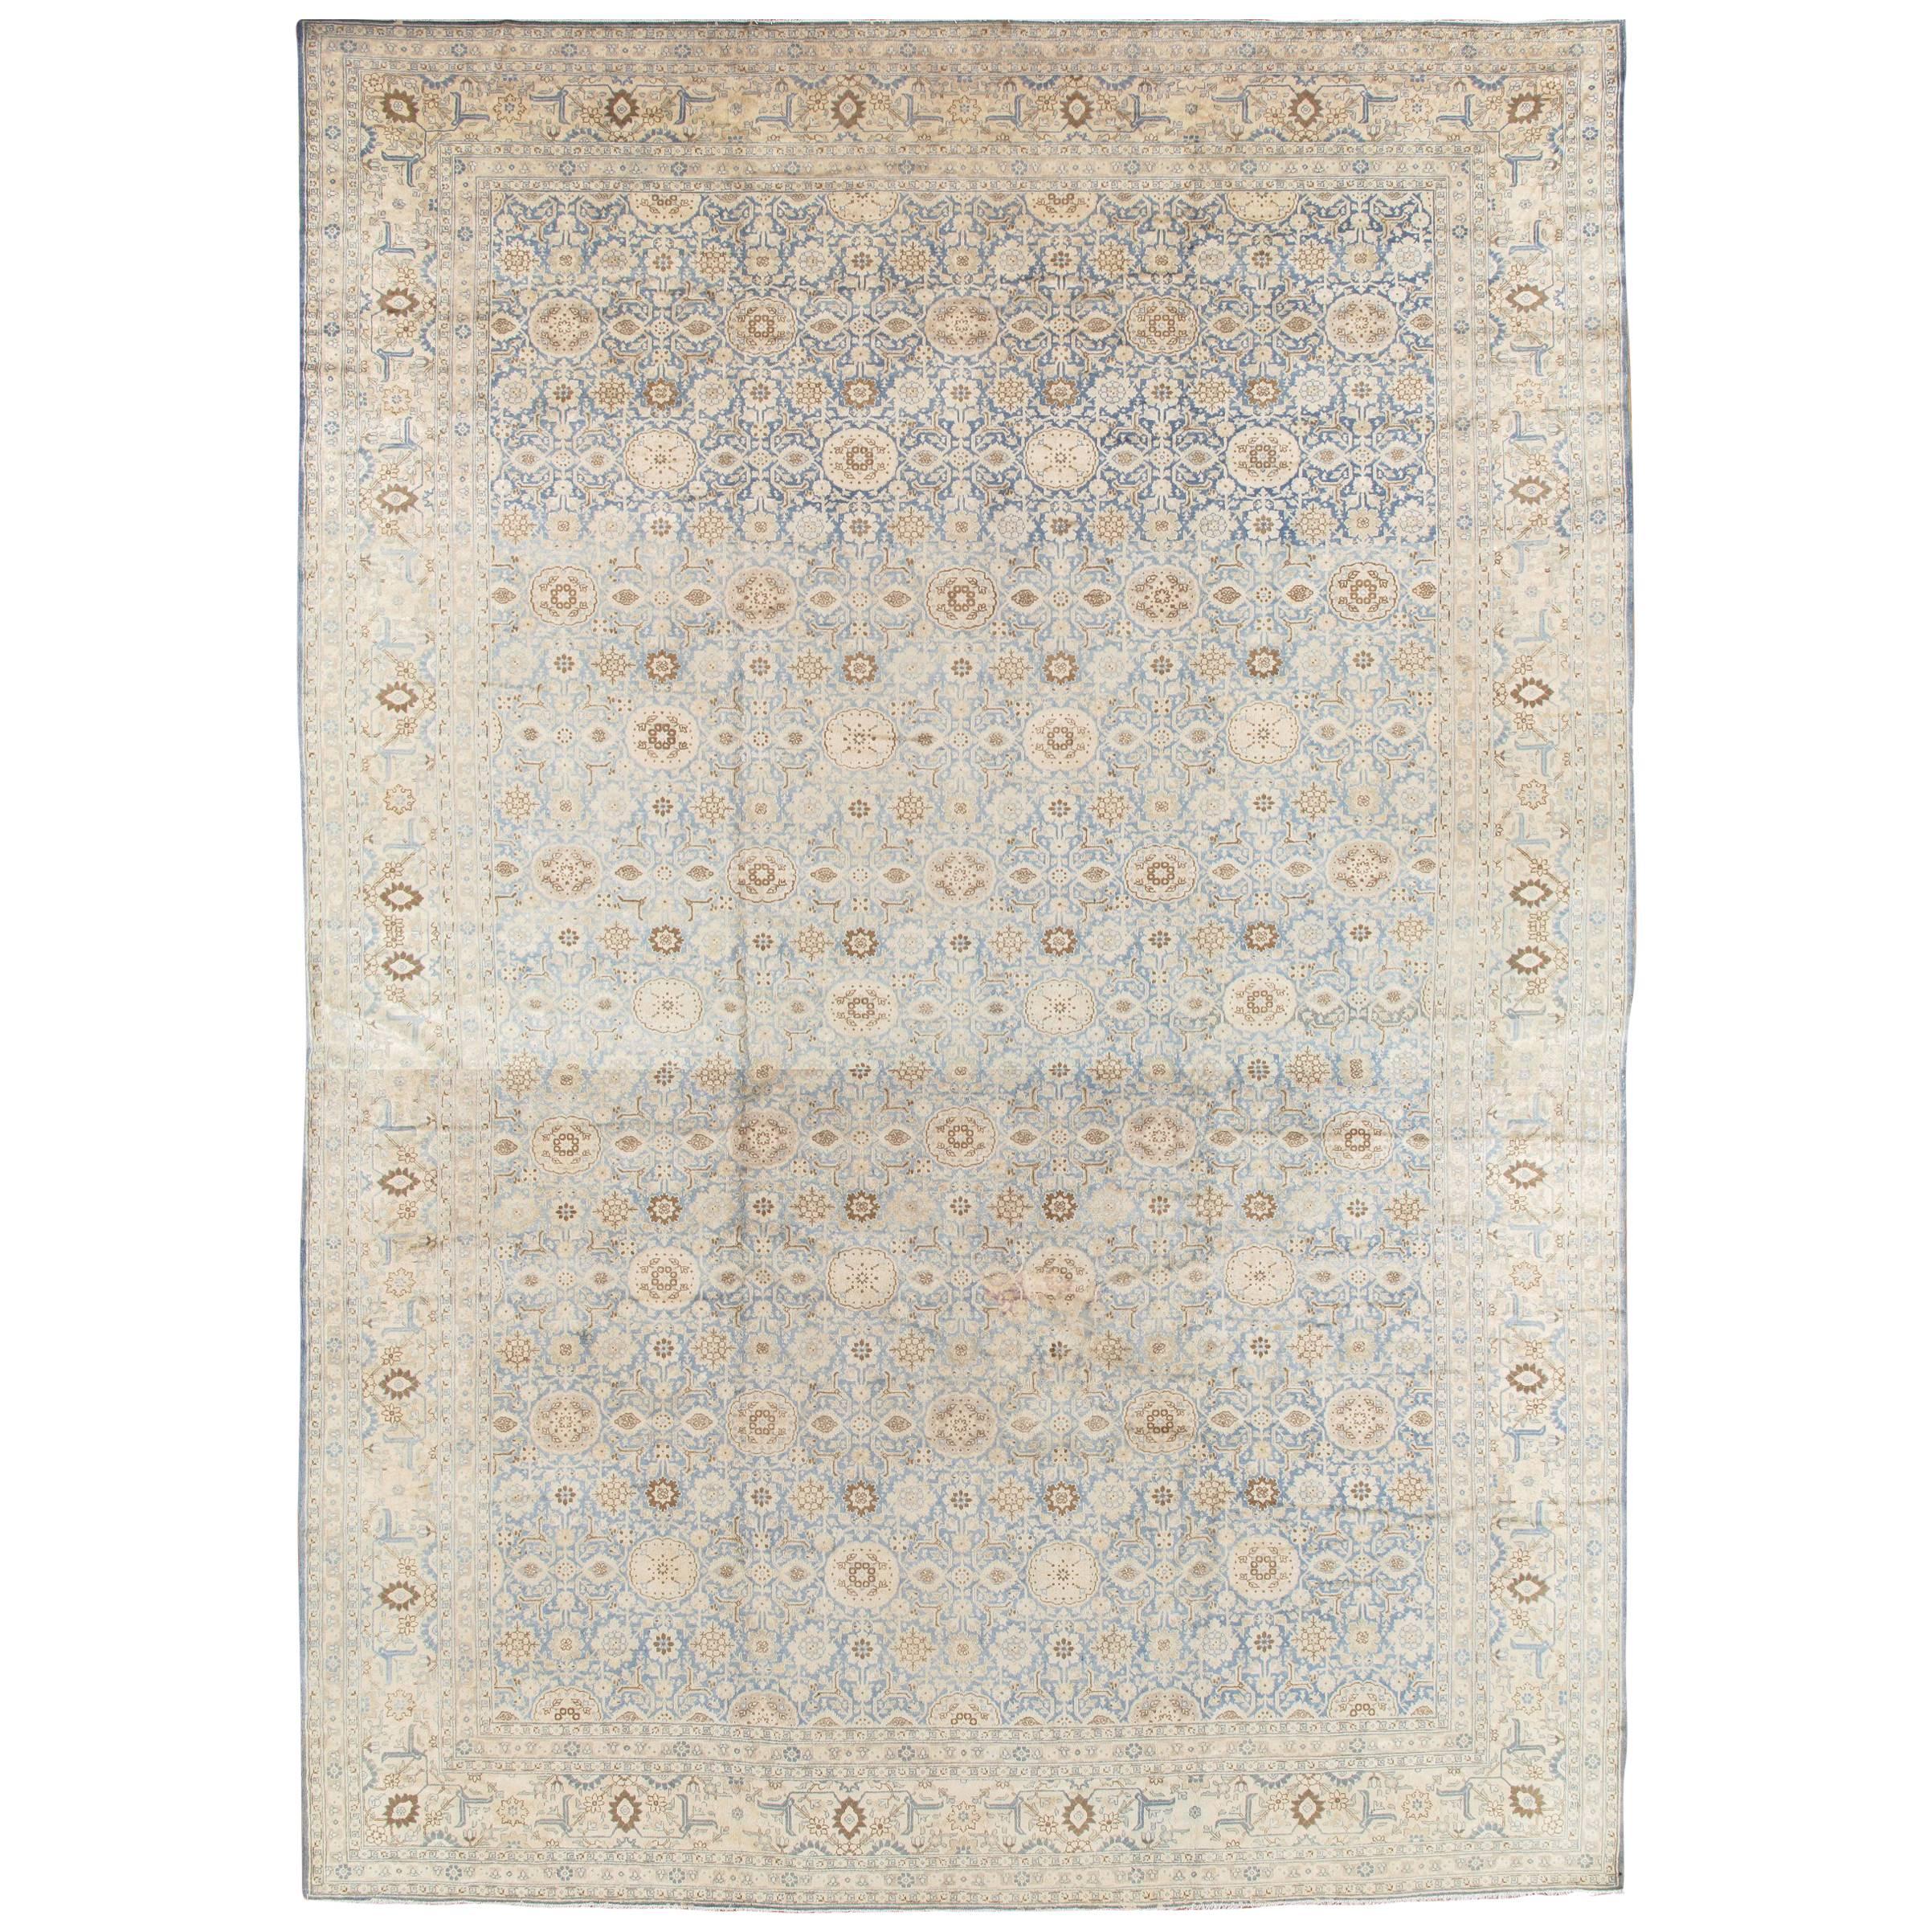 Antique Persian Tabriz Carpet, Pale Light Blue and Beige Carpet, Allover design For Sale